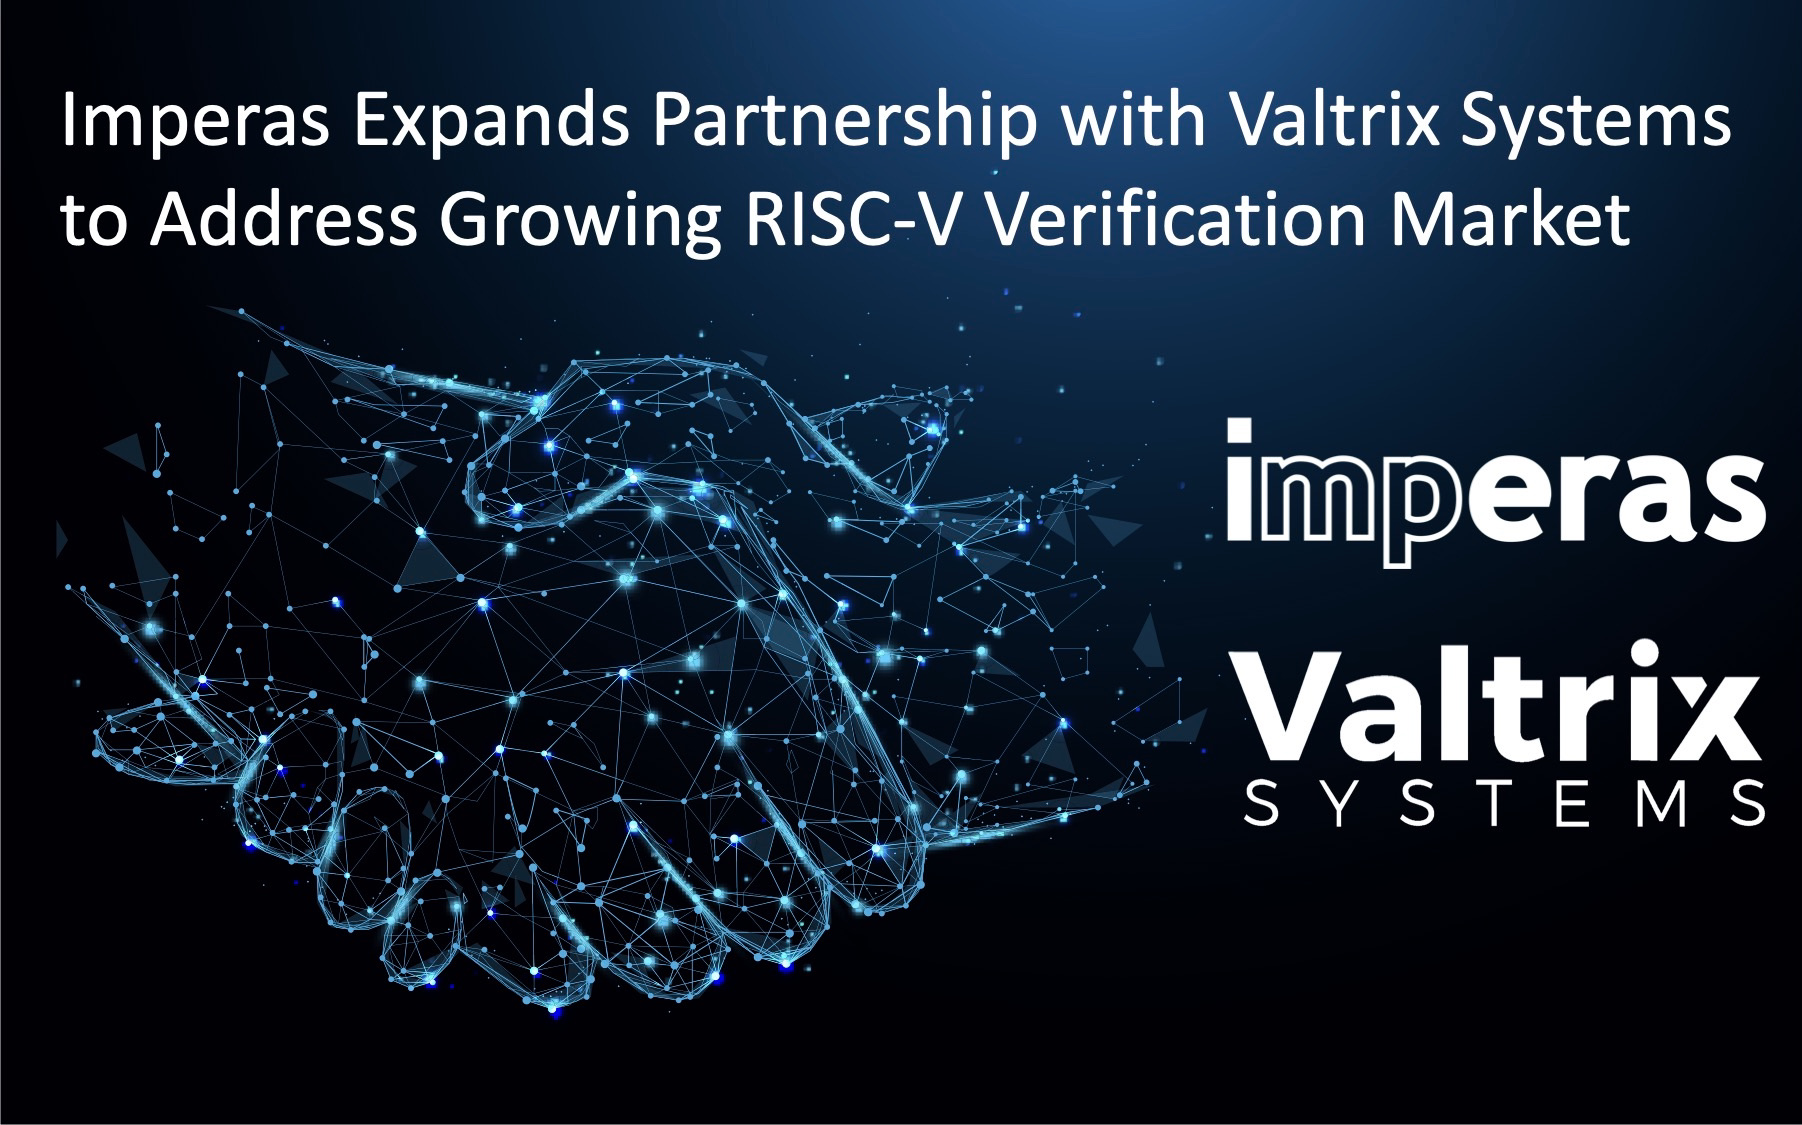 Imperas and Valtrix expand partnership for RISC-V Verification